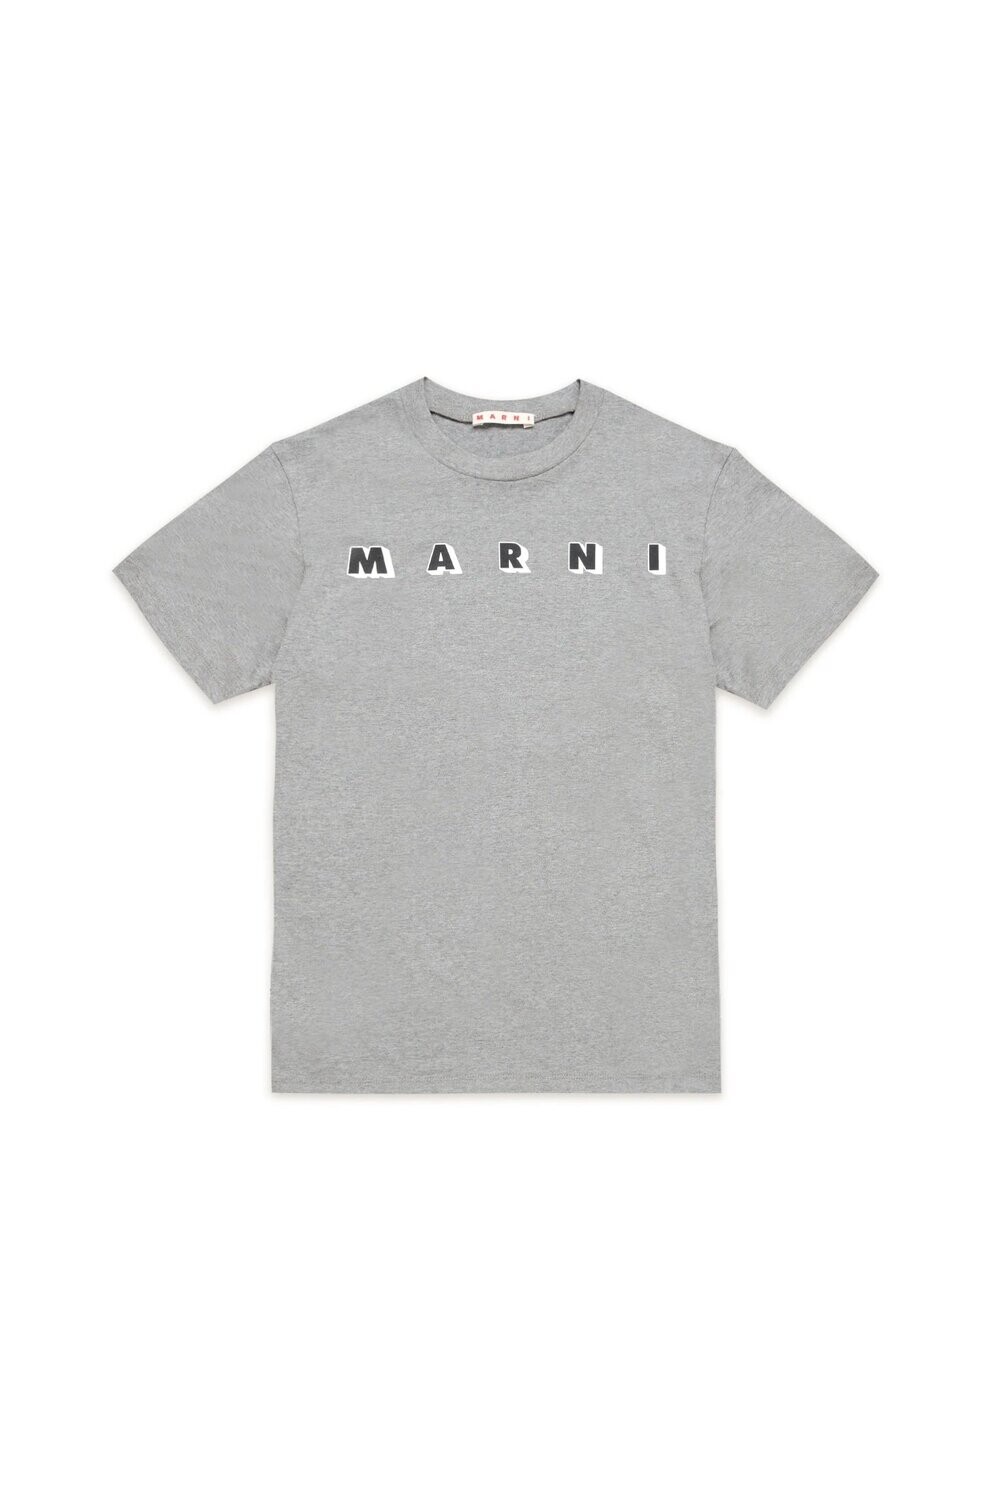 Marni - T-shirt grigia logo, Size: 10 anni